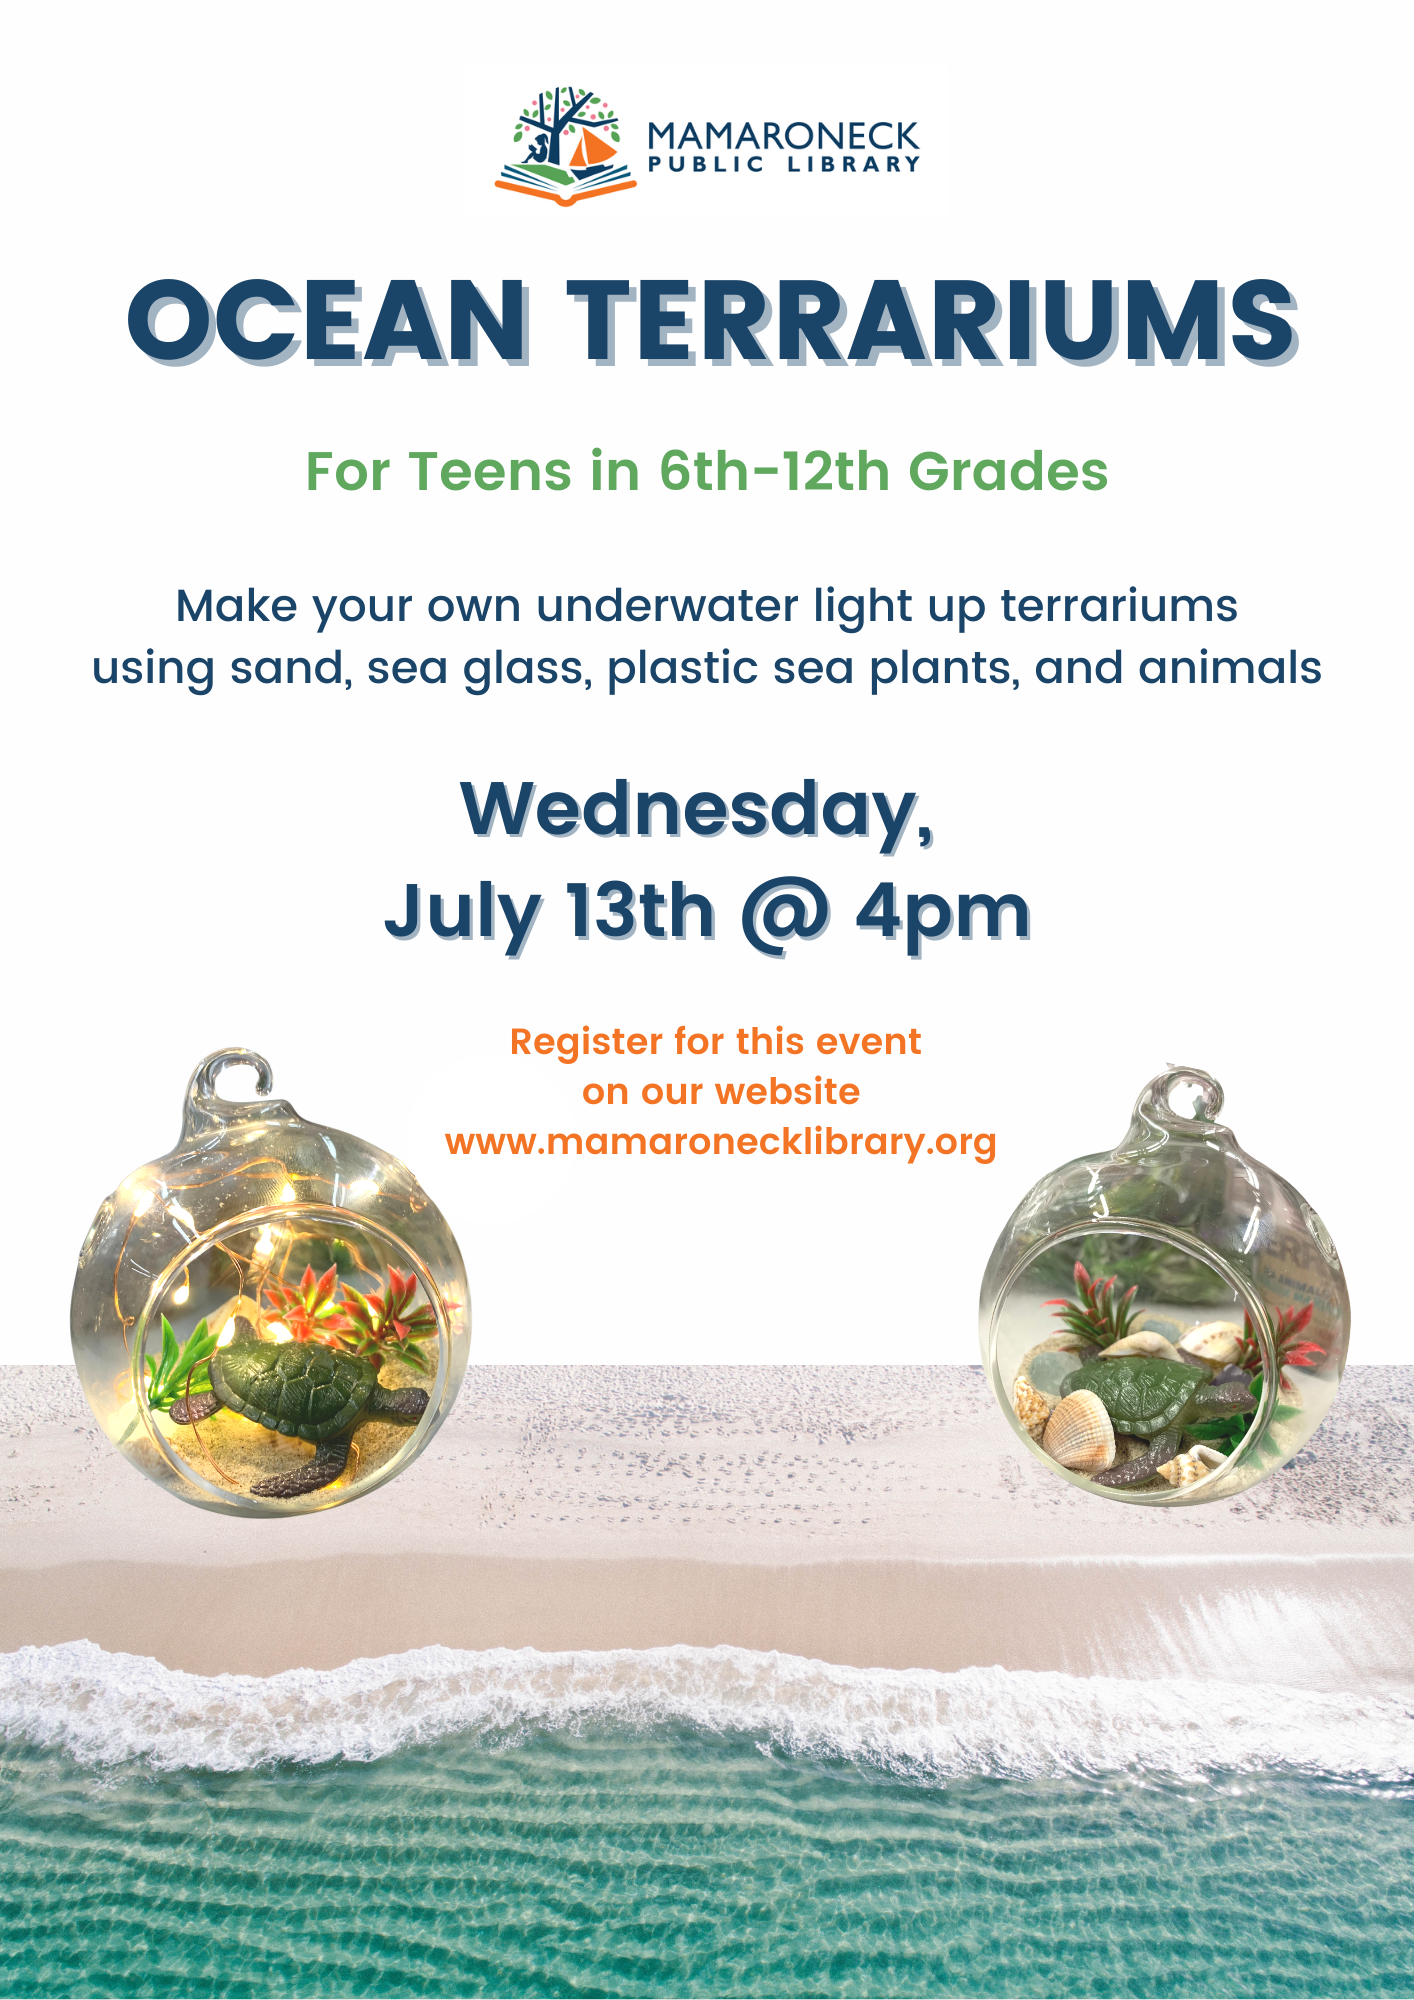 Teens: Make an ocean terrarium July 13